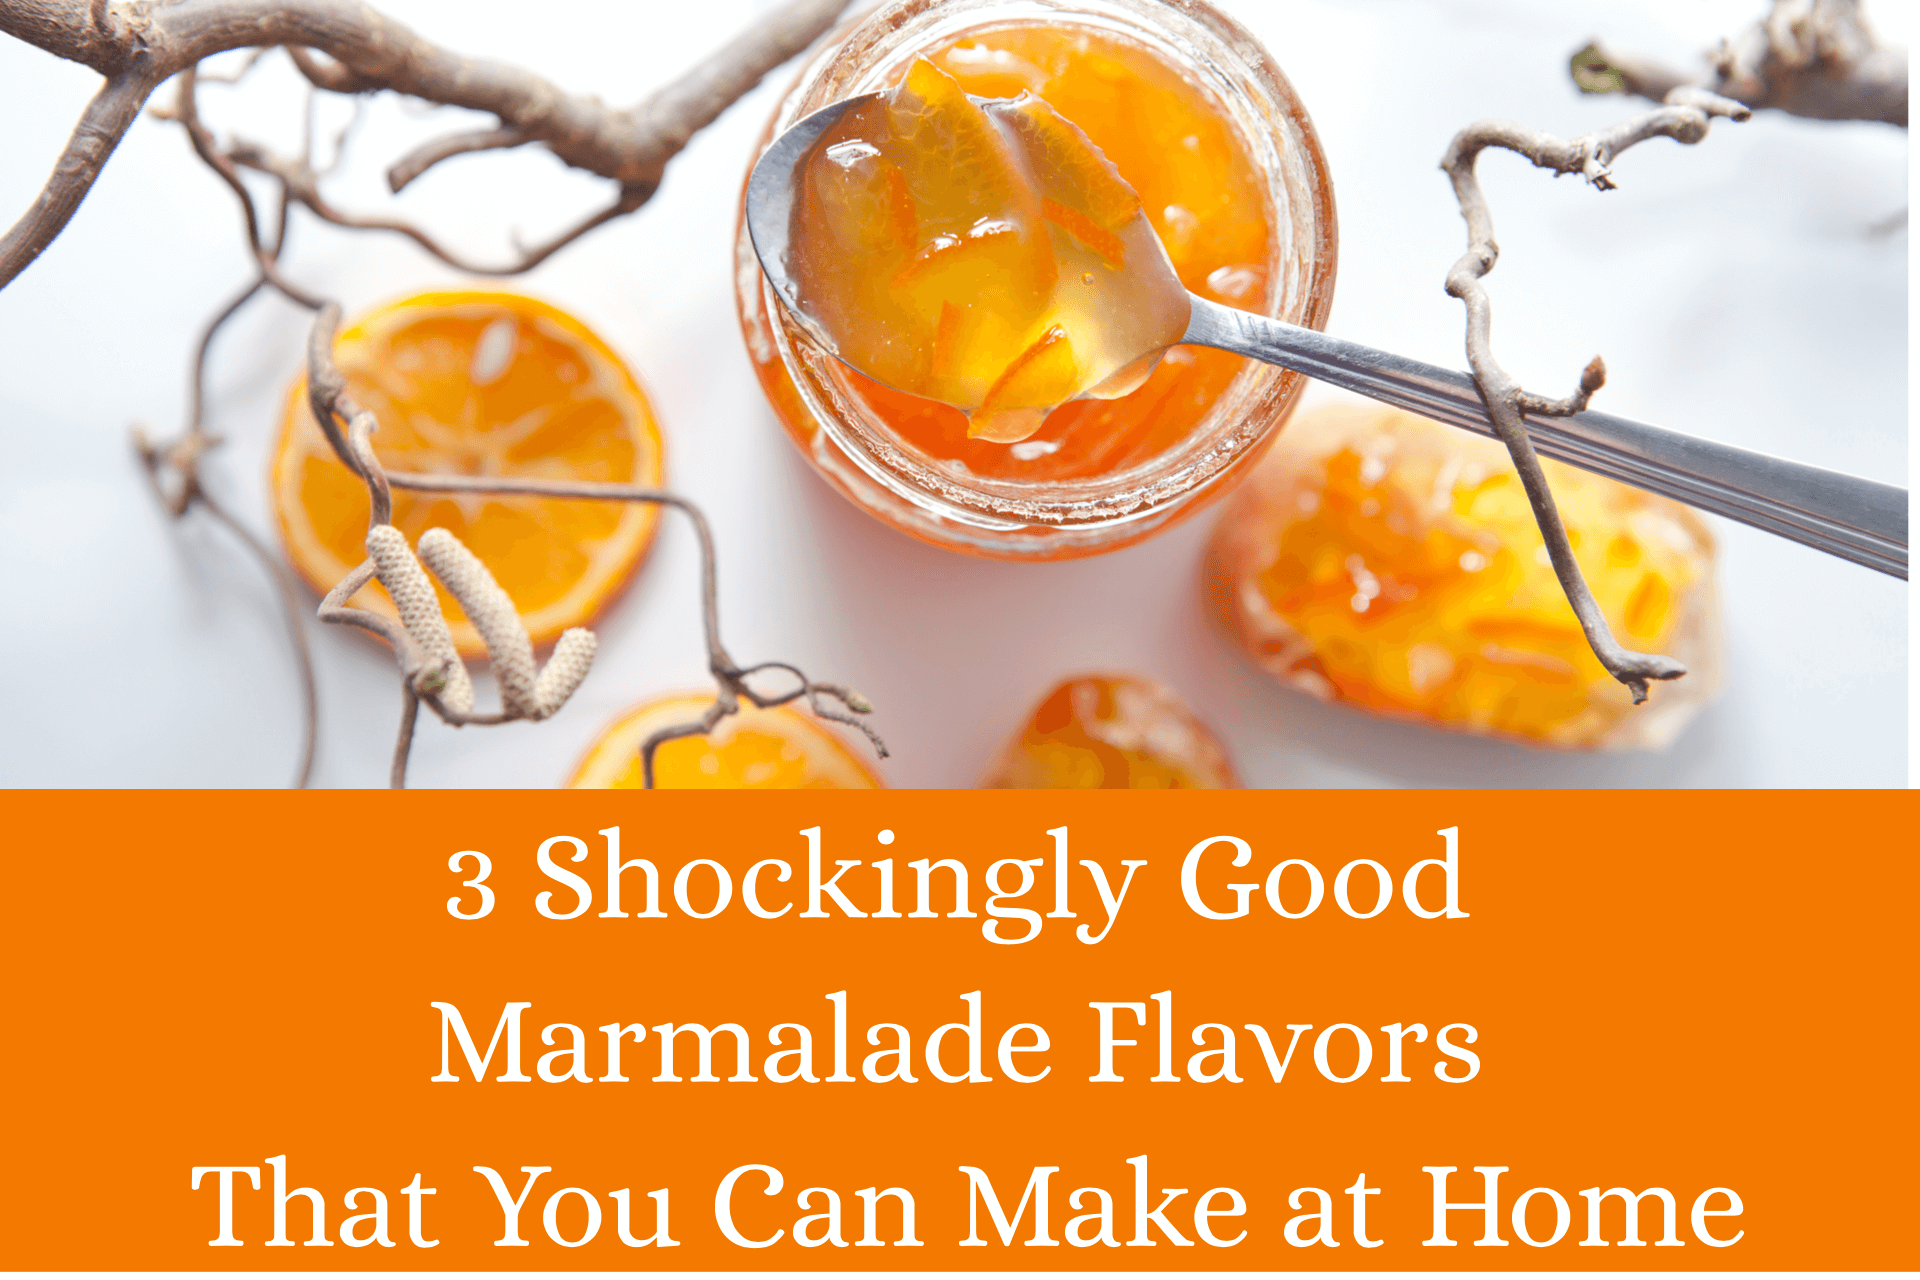 3 Shockingly Good Marmalade Flavors